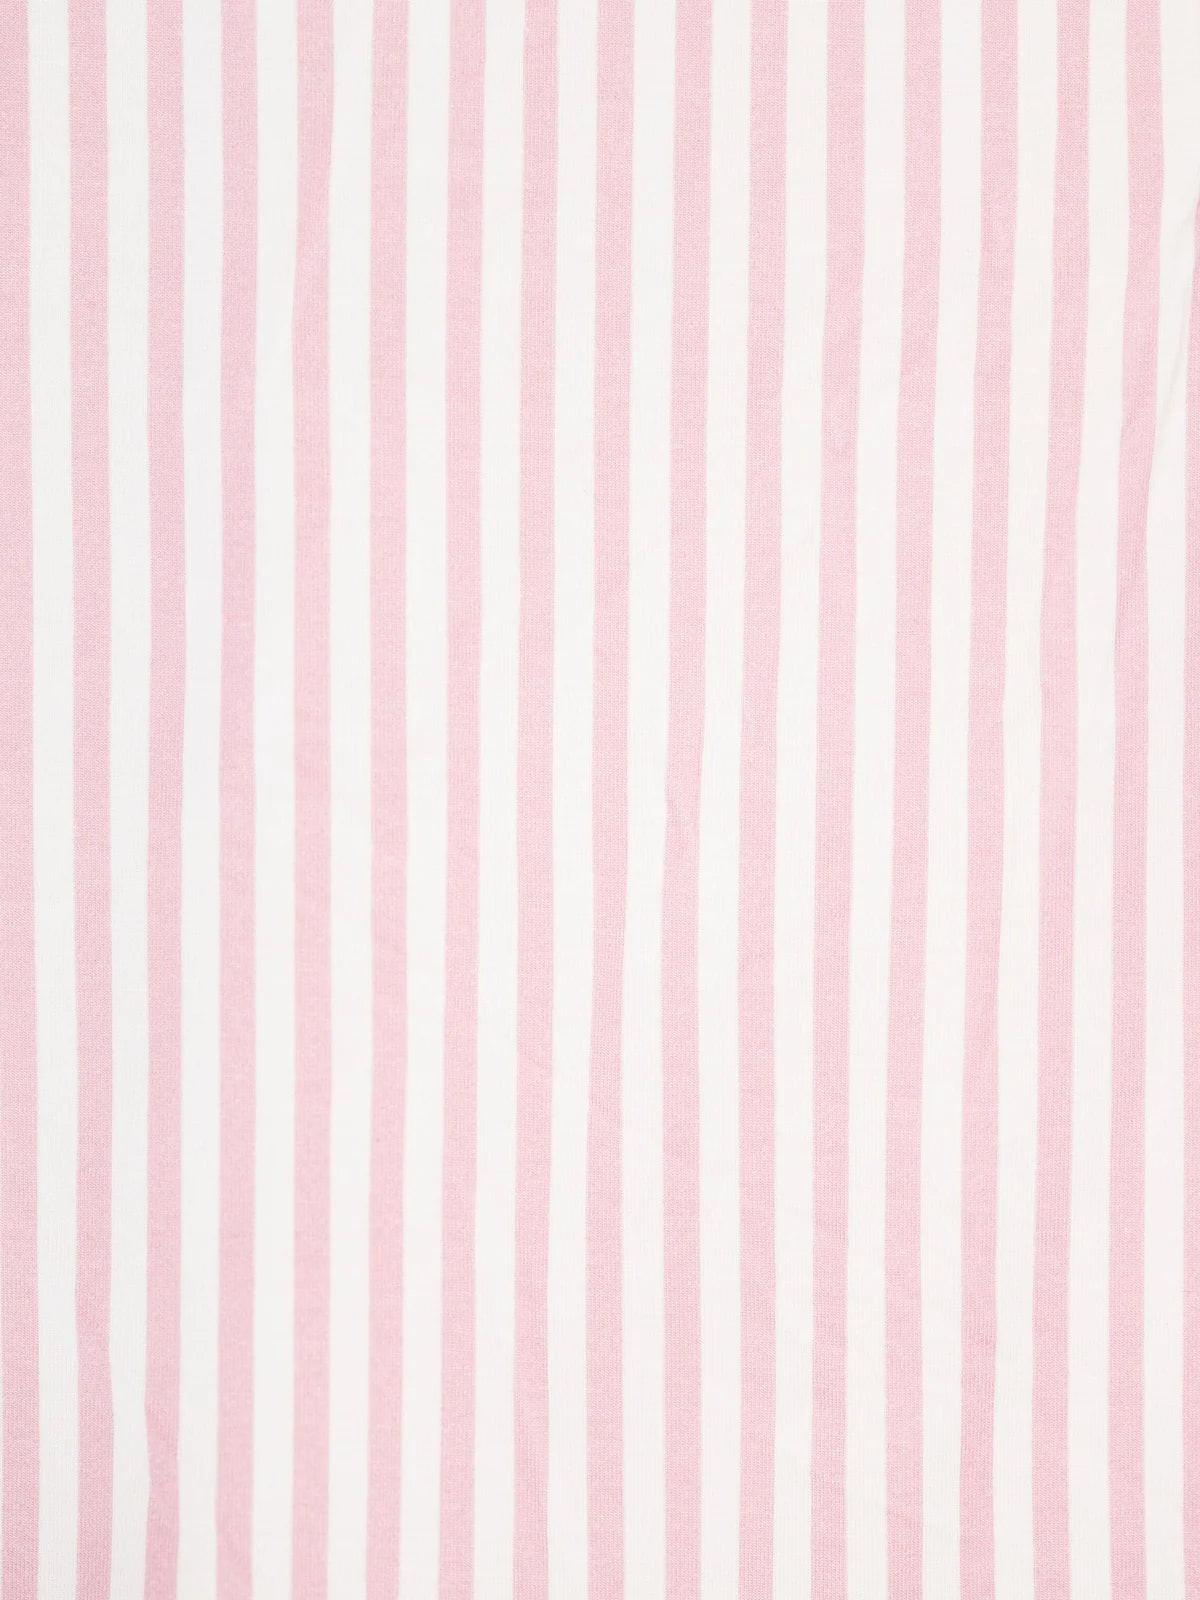 Sleep Romper - Pink Mini Stripe